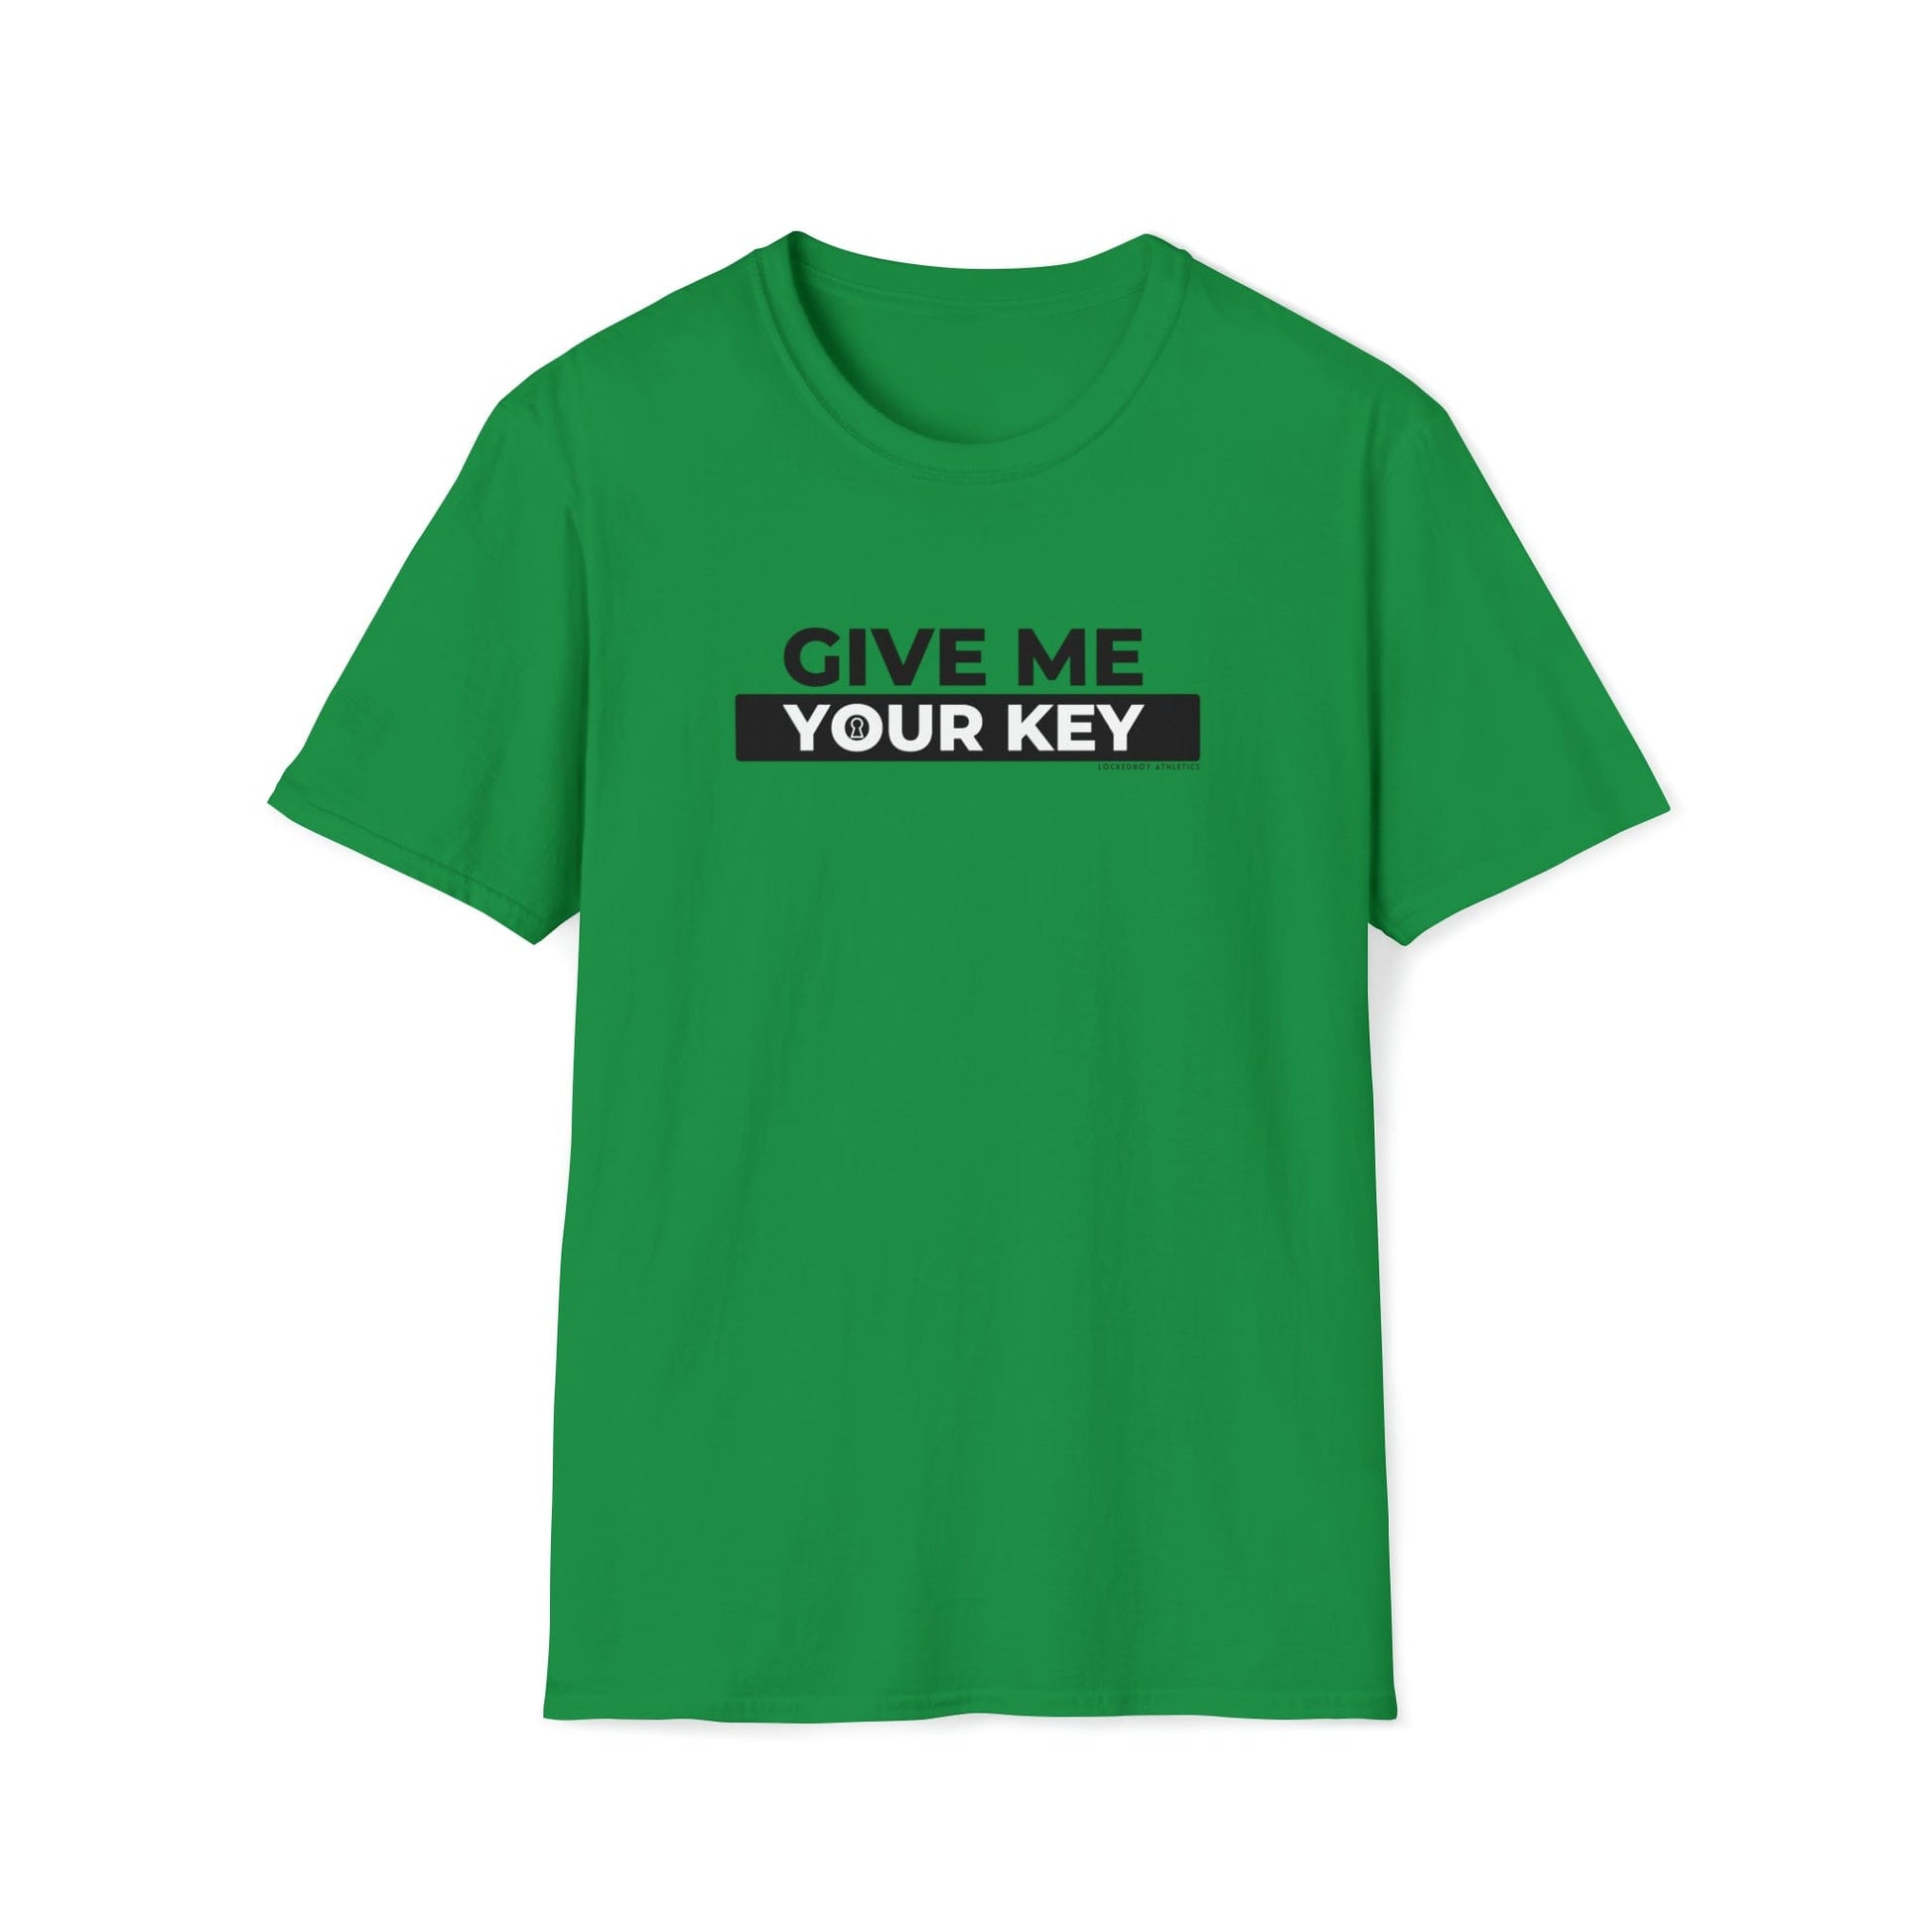 T-Shirt Irish Green / S Give Me Your Key - Chastity Shirts by LockedBoy Athletics LEATHERDADDY BATOR